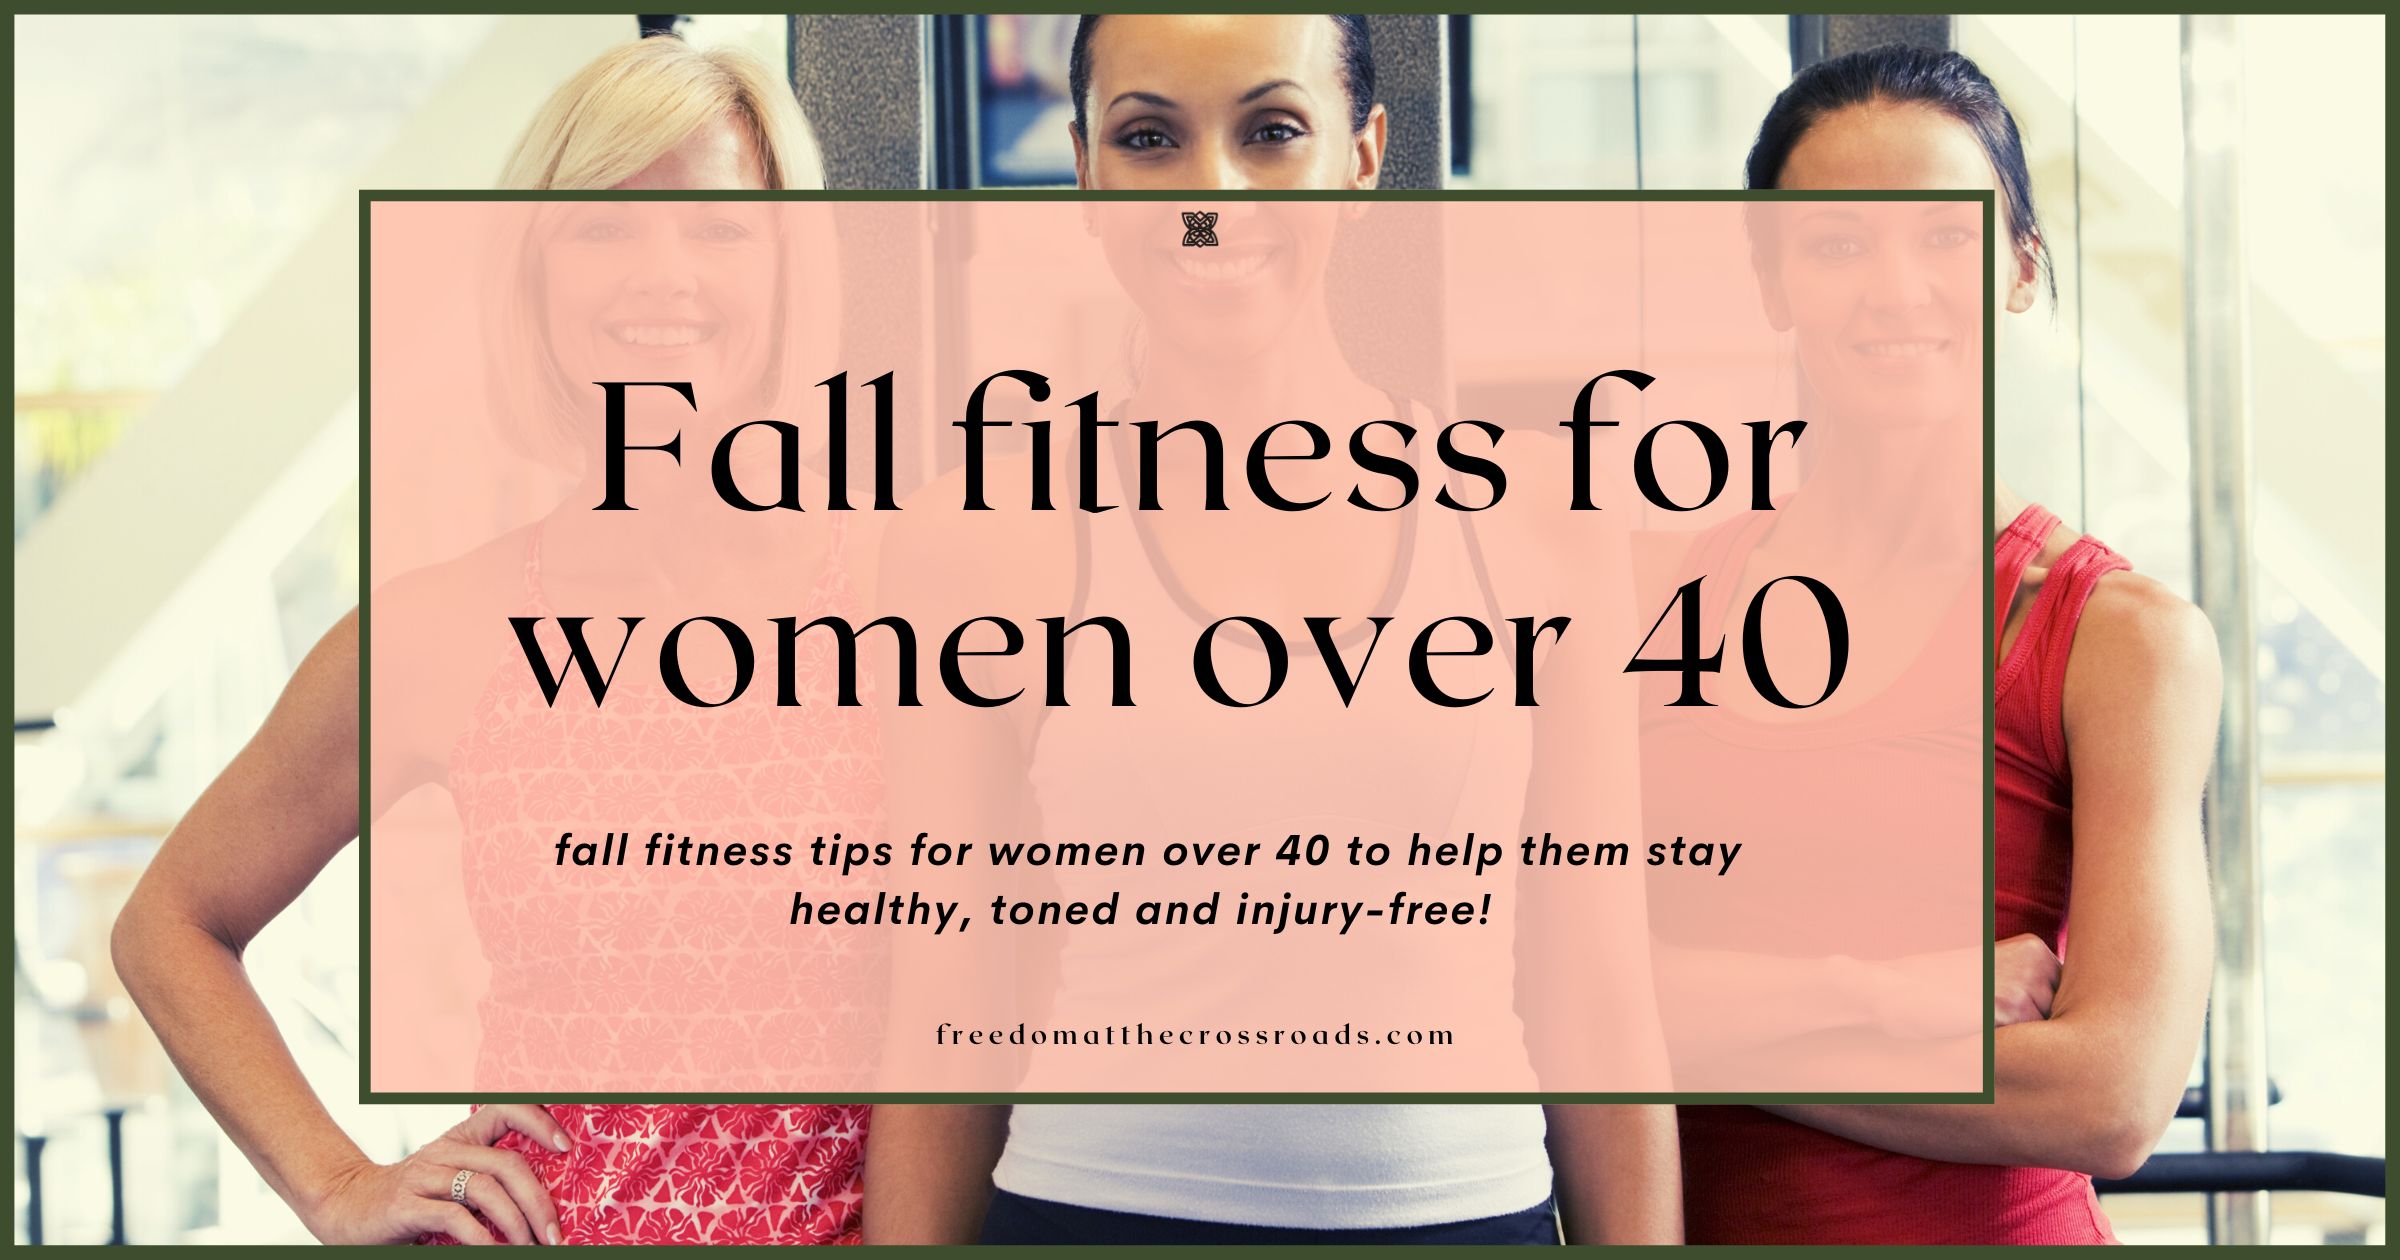 Fall fitness for women over 40 blog post image